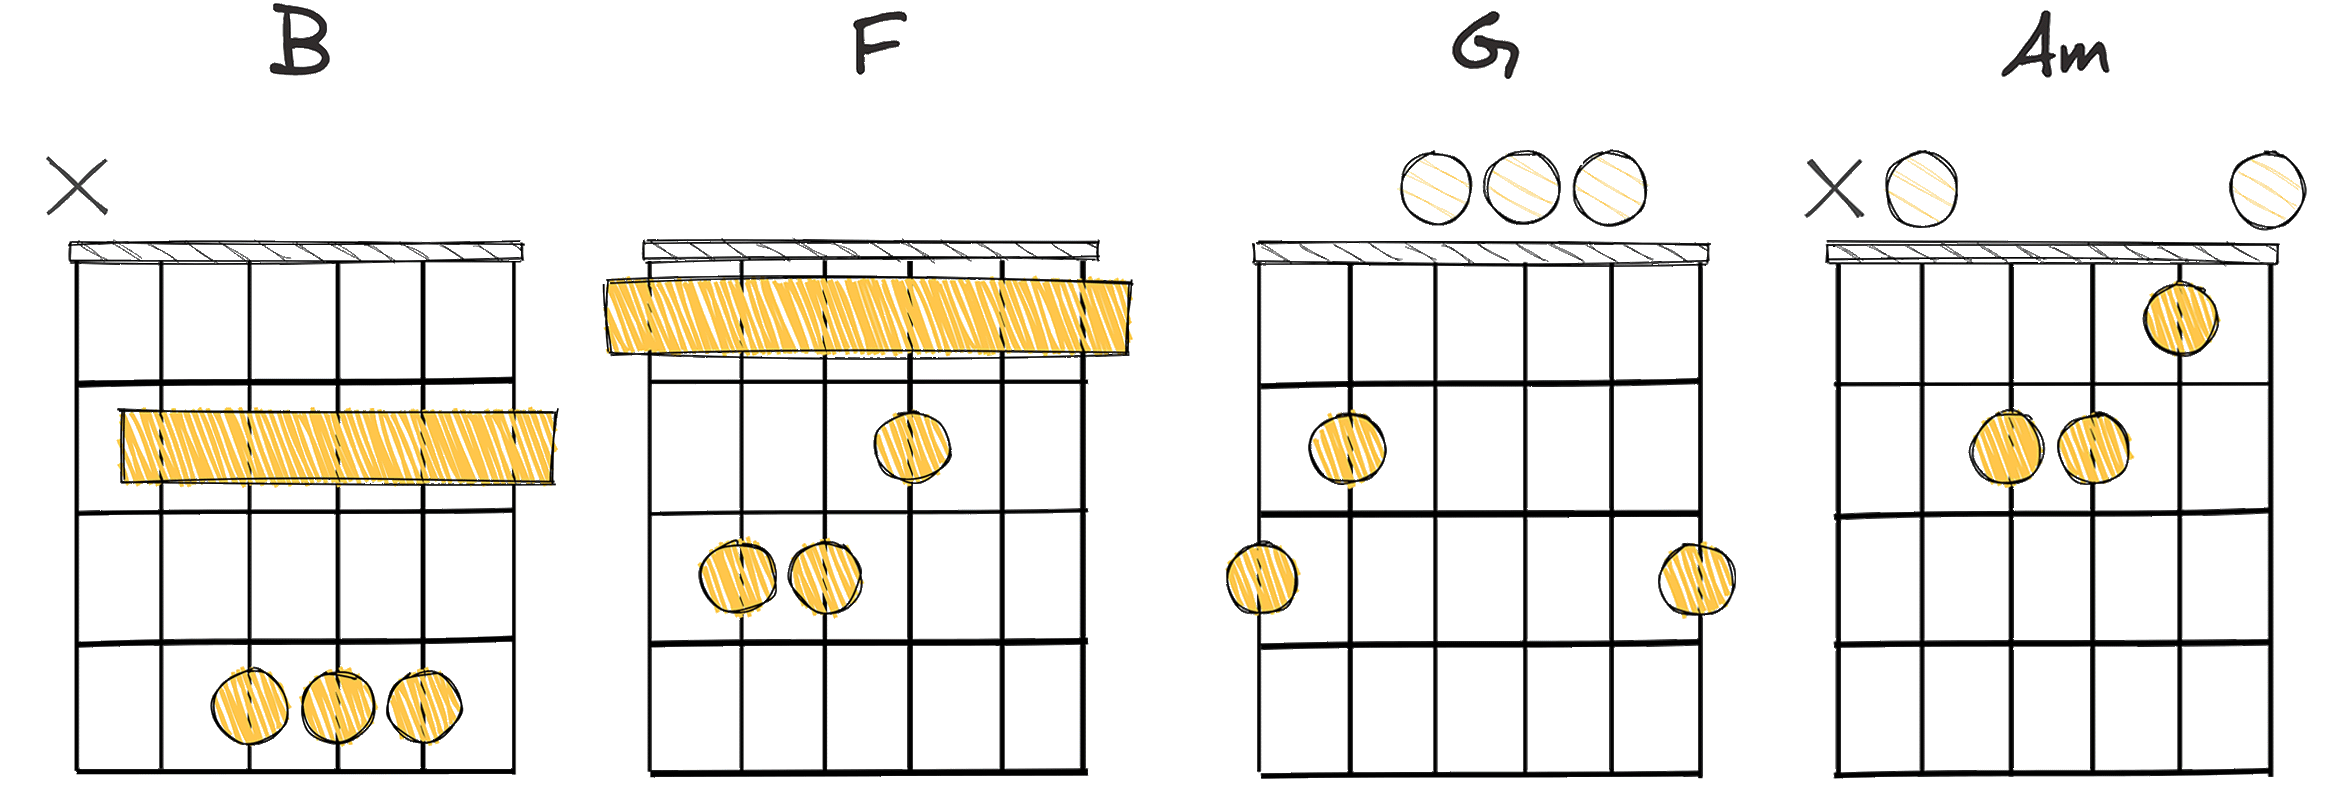 II-VI-VII-i (2-6-7-1) chords diagram